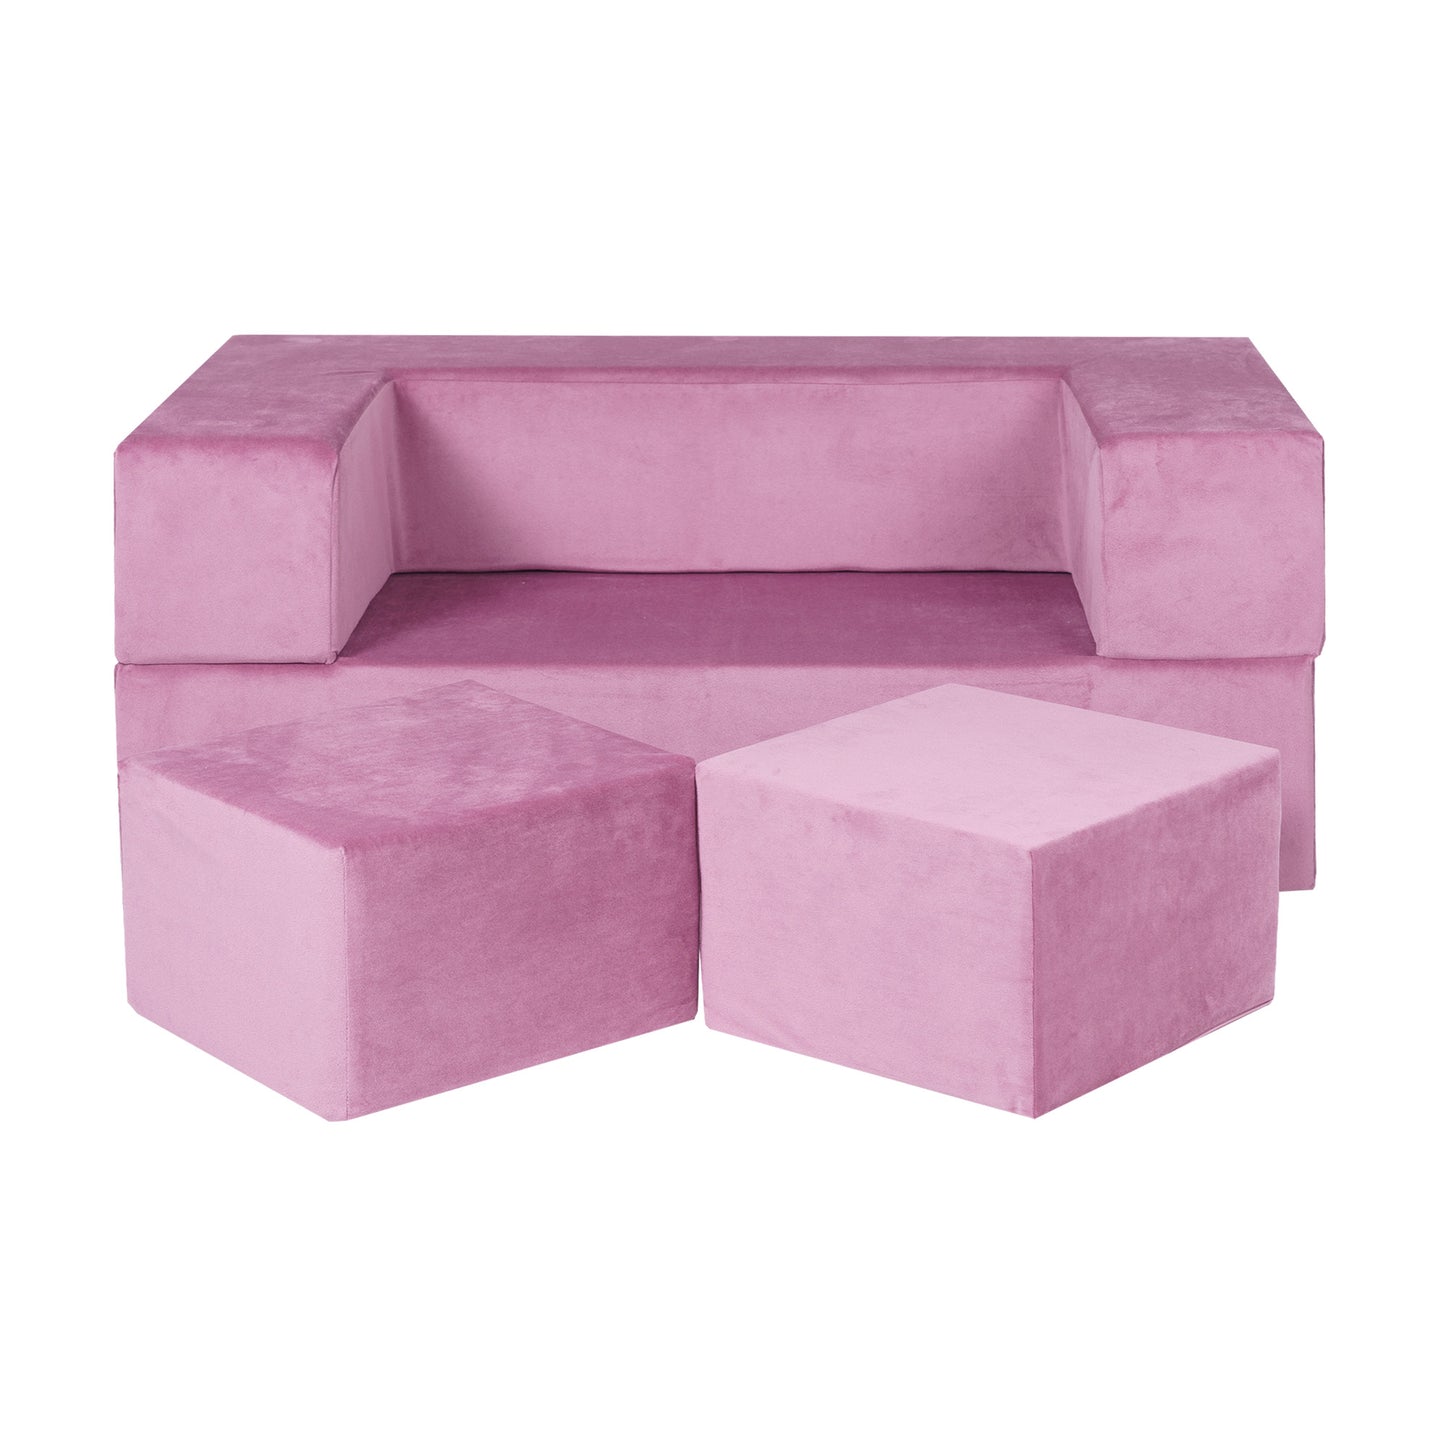 Soft Blocks Sofa, Pink